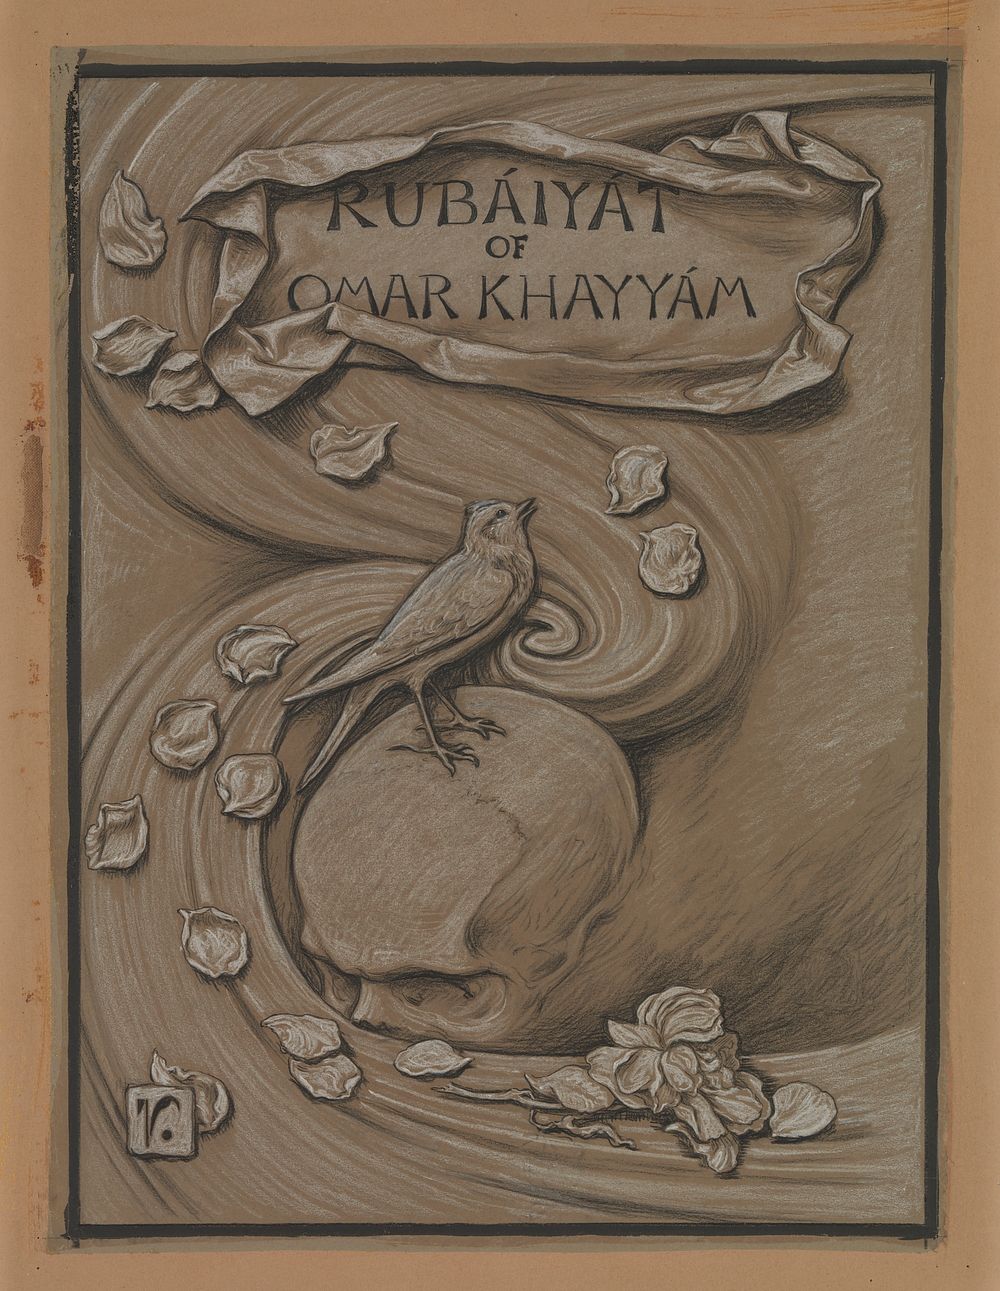 (Illustration for Rubáiyát of Omar Khayyám) Omar's Emblem